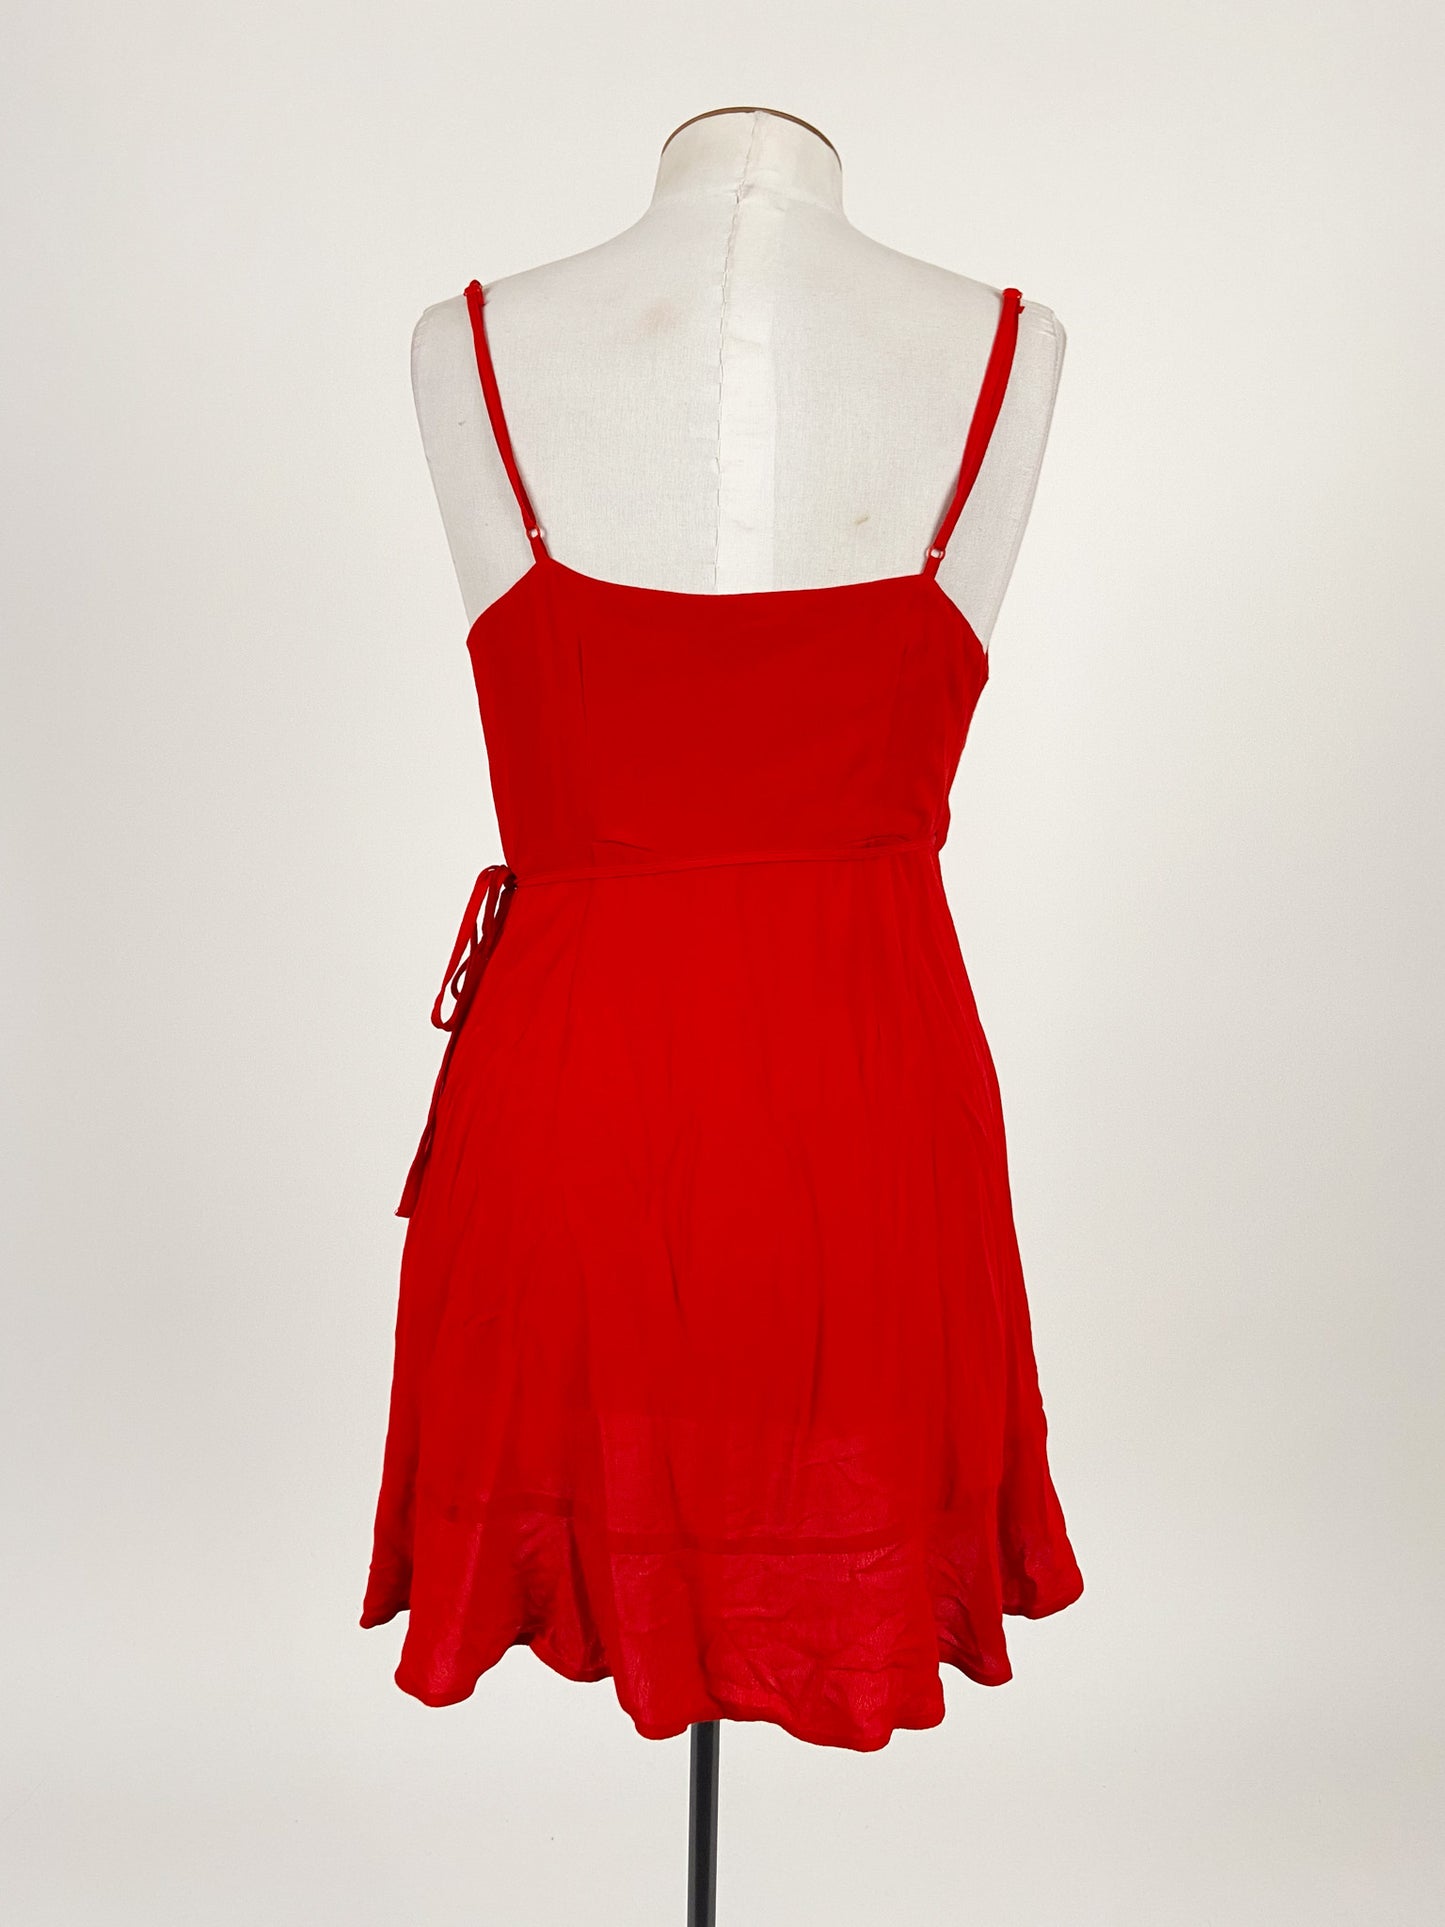 Bershka | Red Cocktail/Formal Dress | Size M